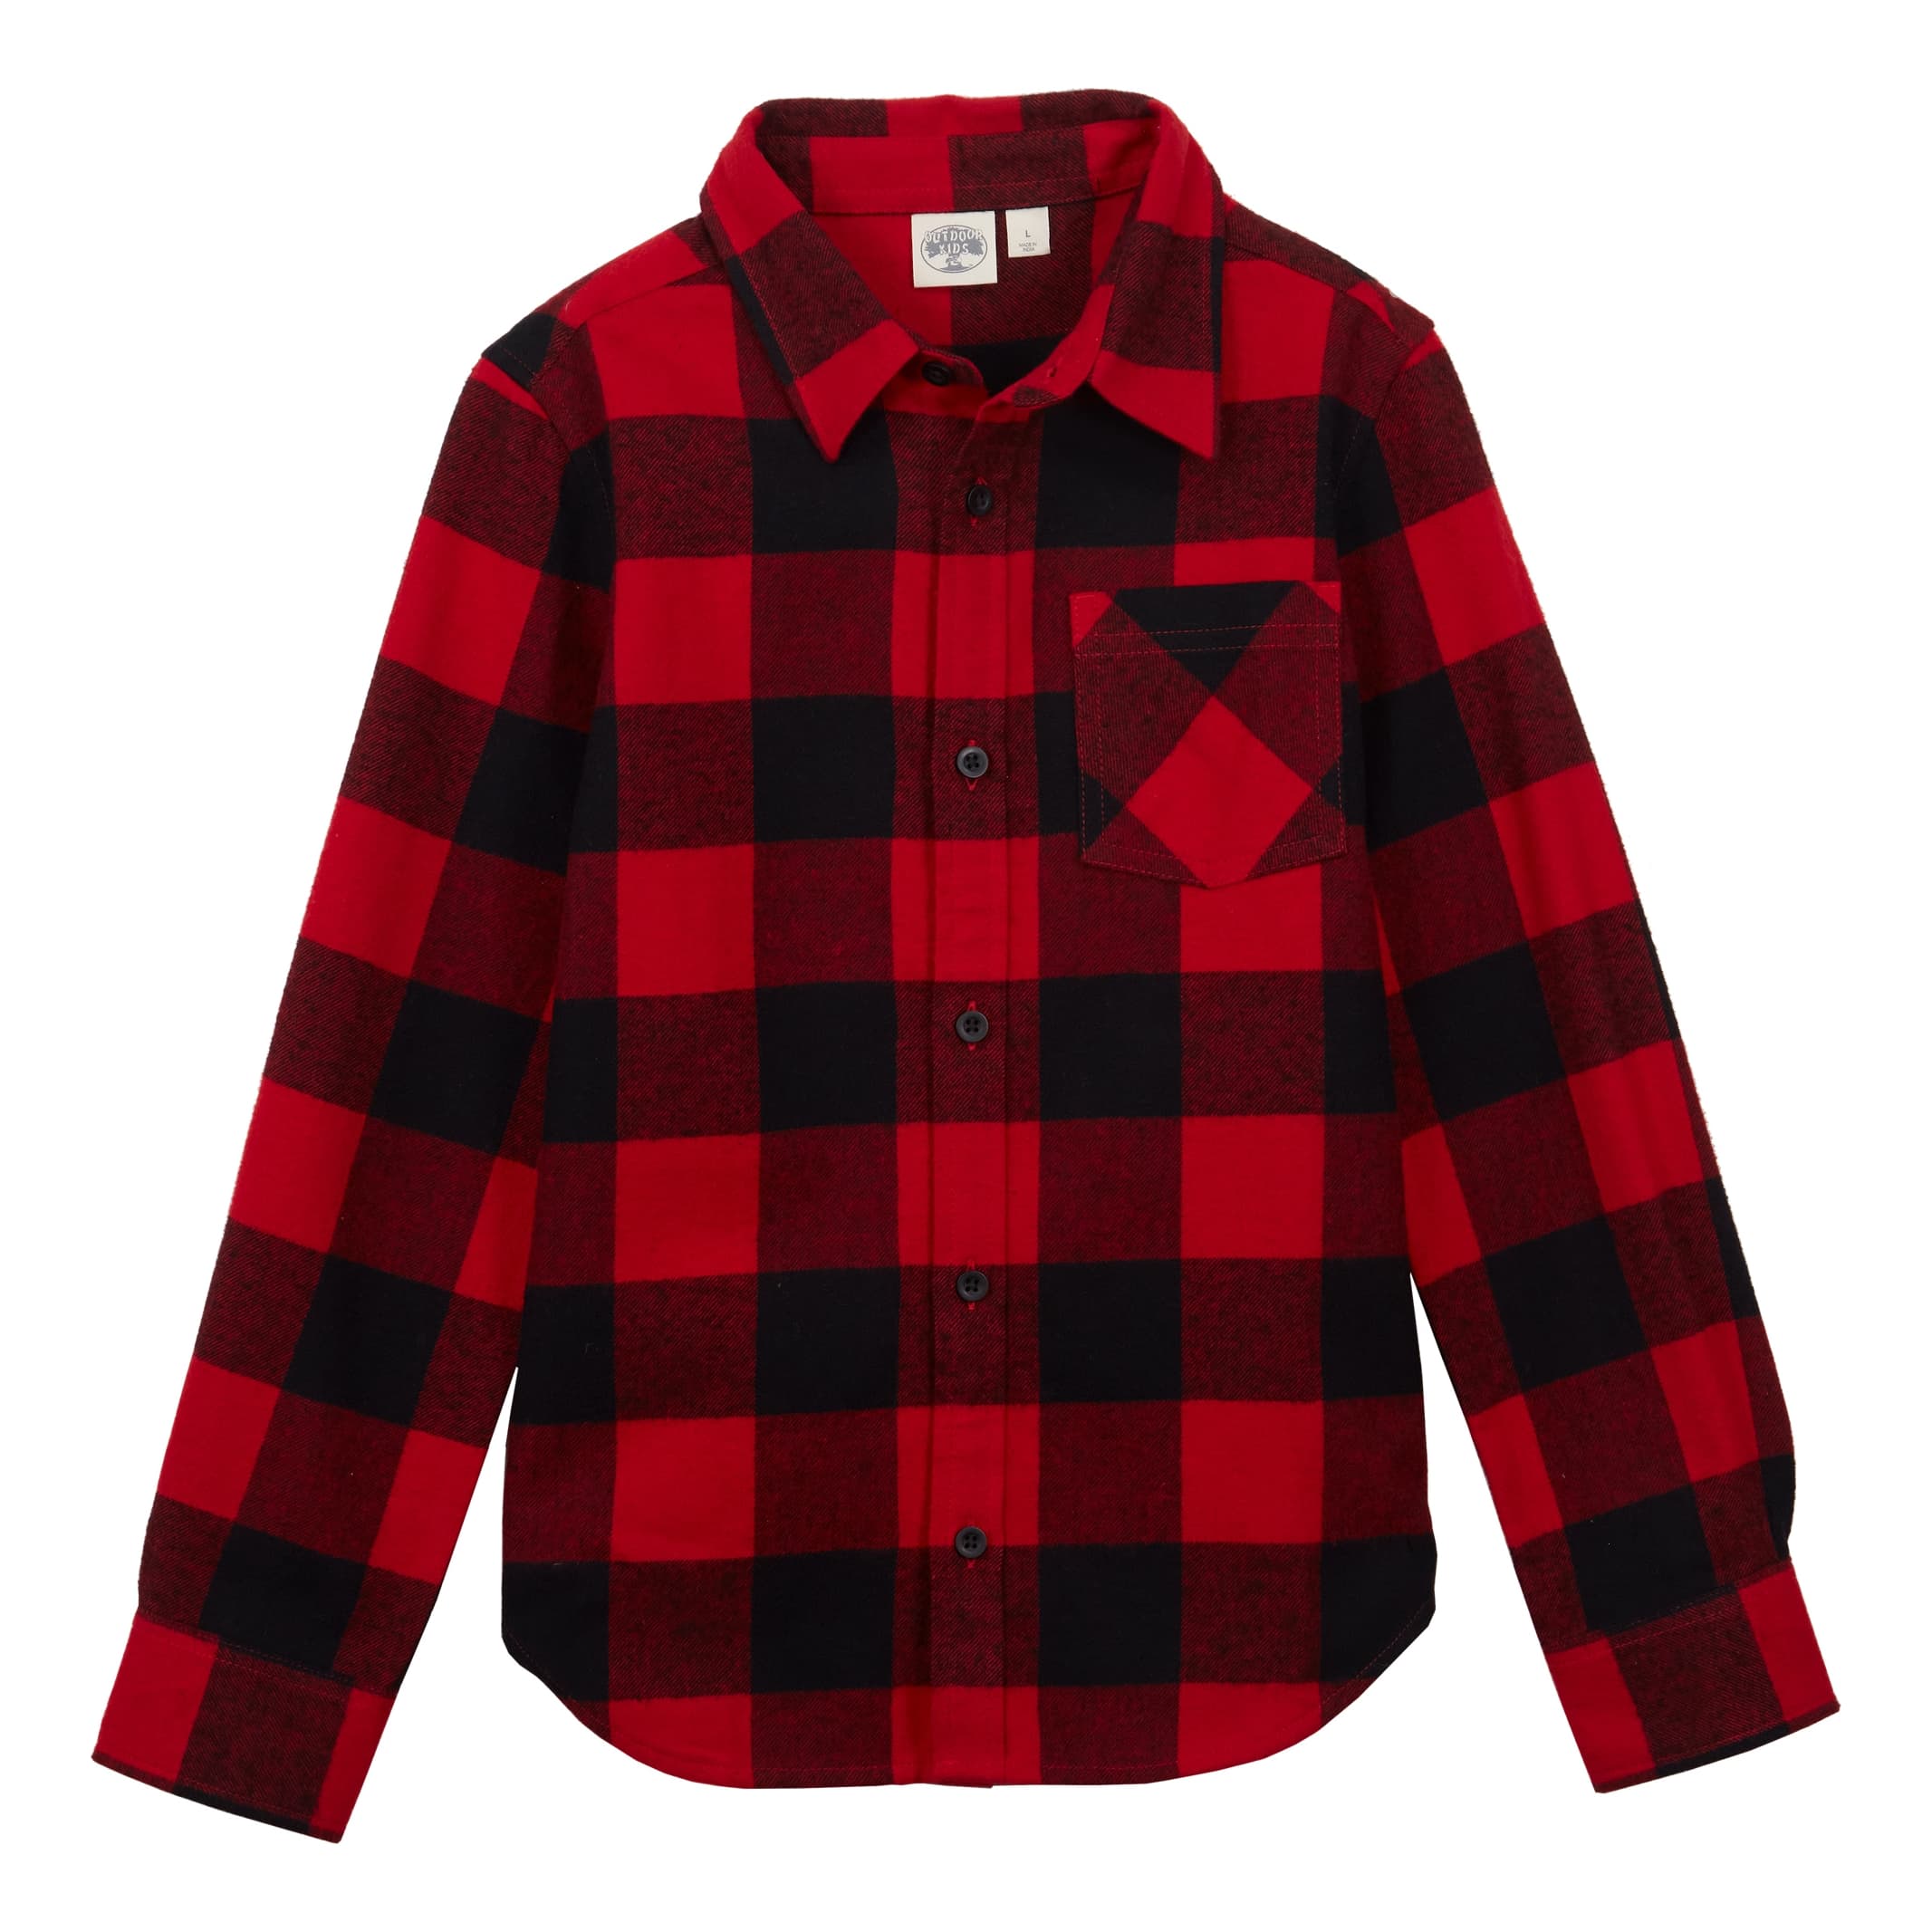 Bass Pro Shops® Boys’ Long-Sleeve Flannel Button-Down Shirt - Red Black Buffalo